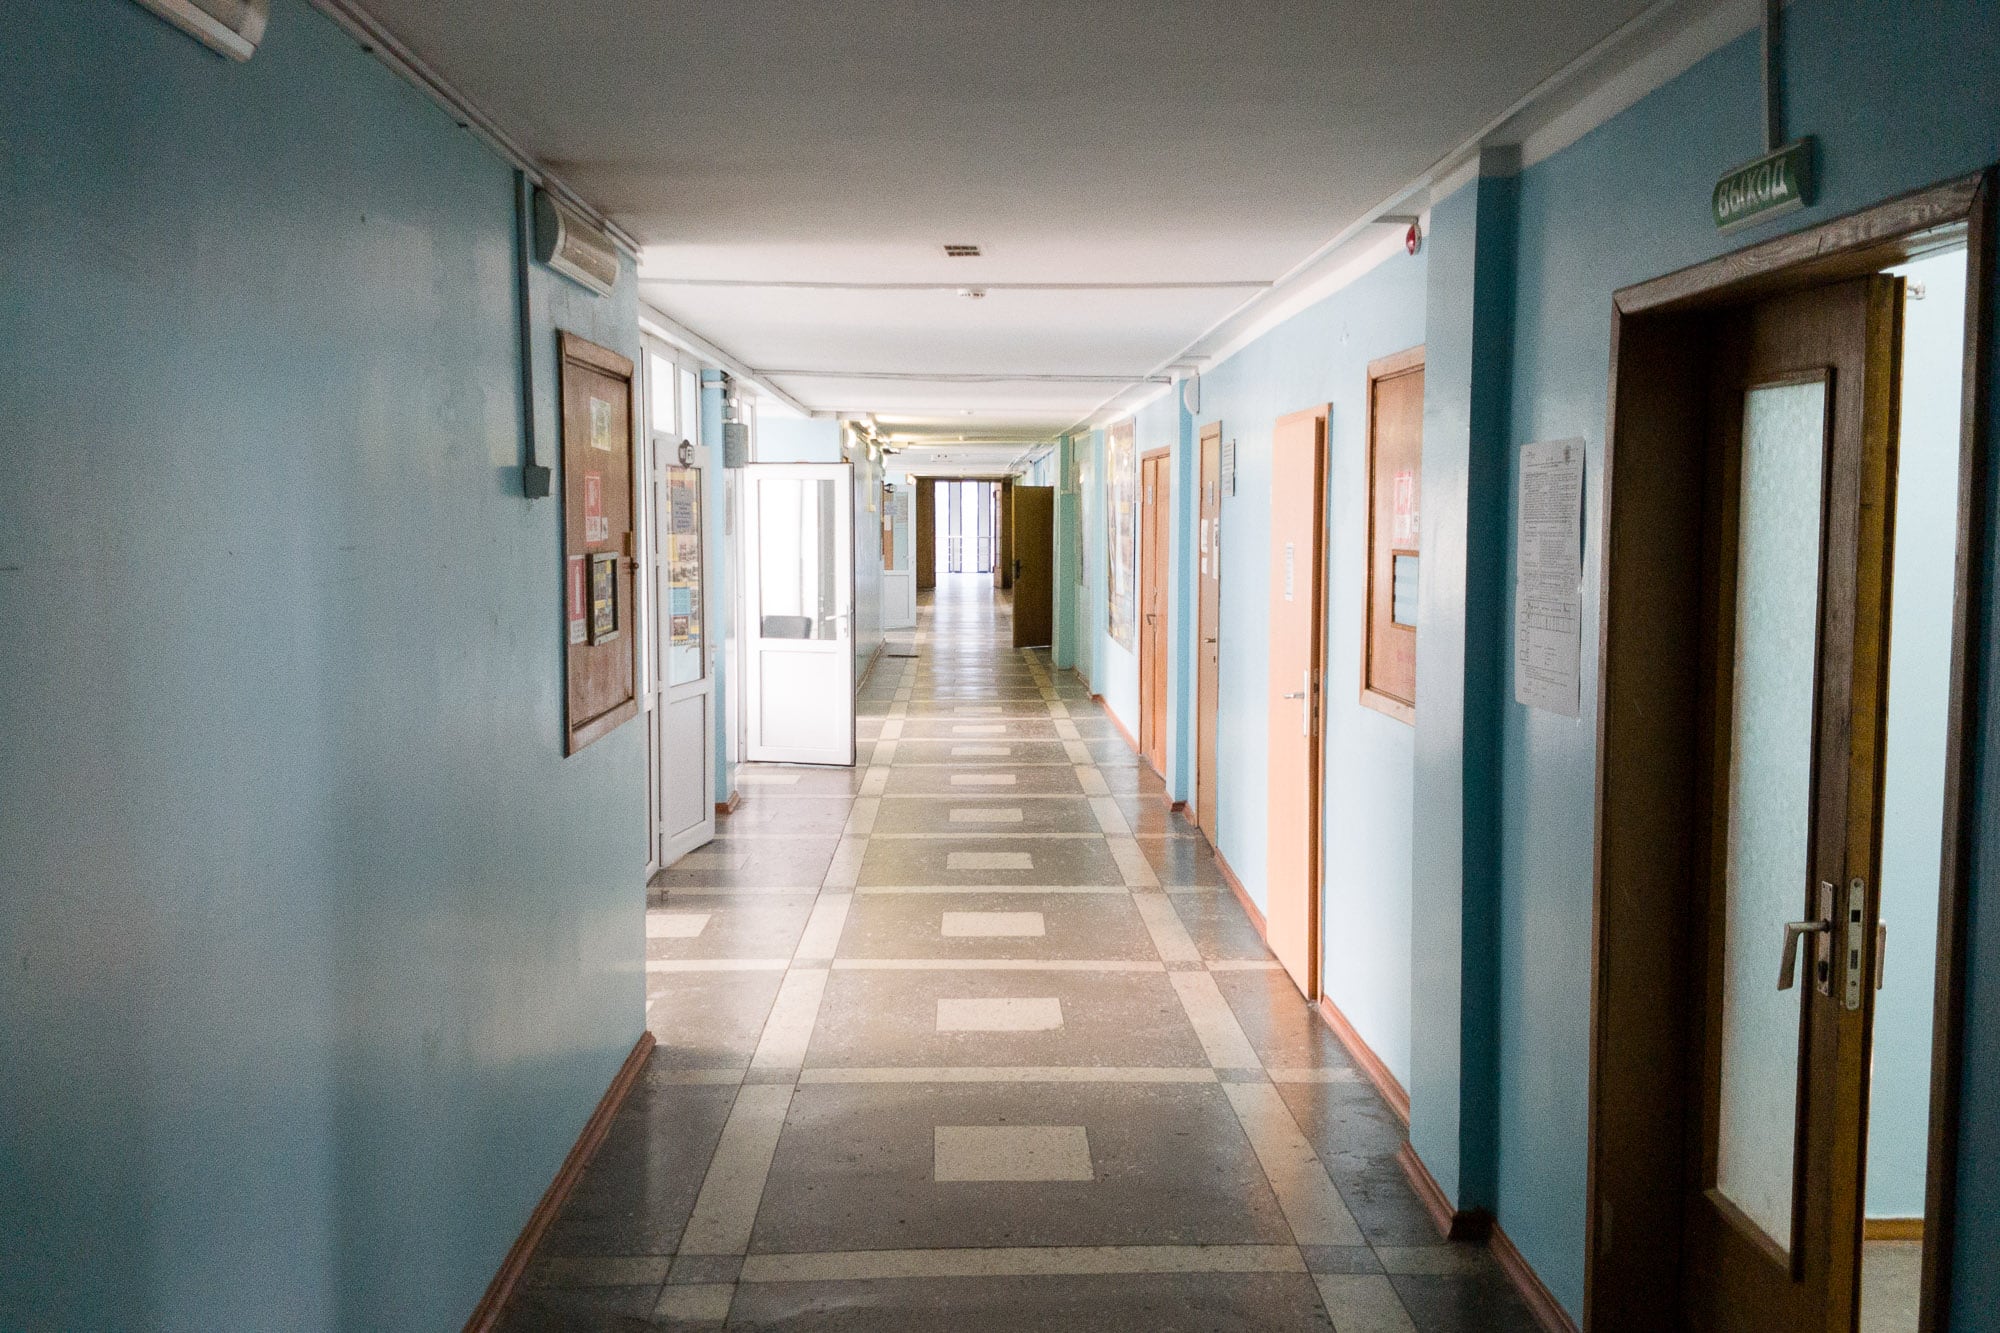 KIMEP University hallway